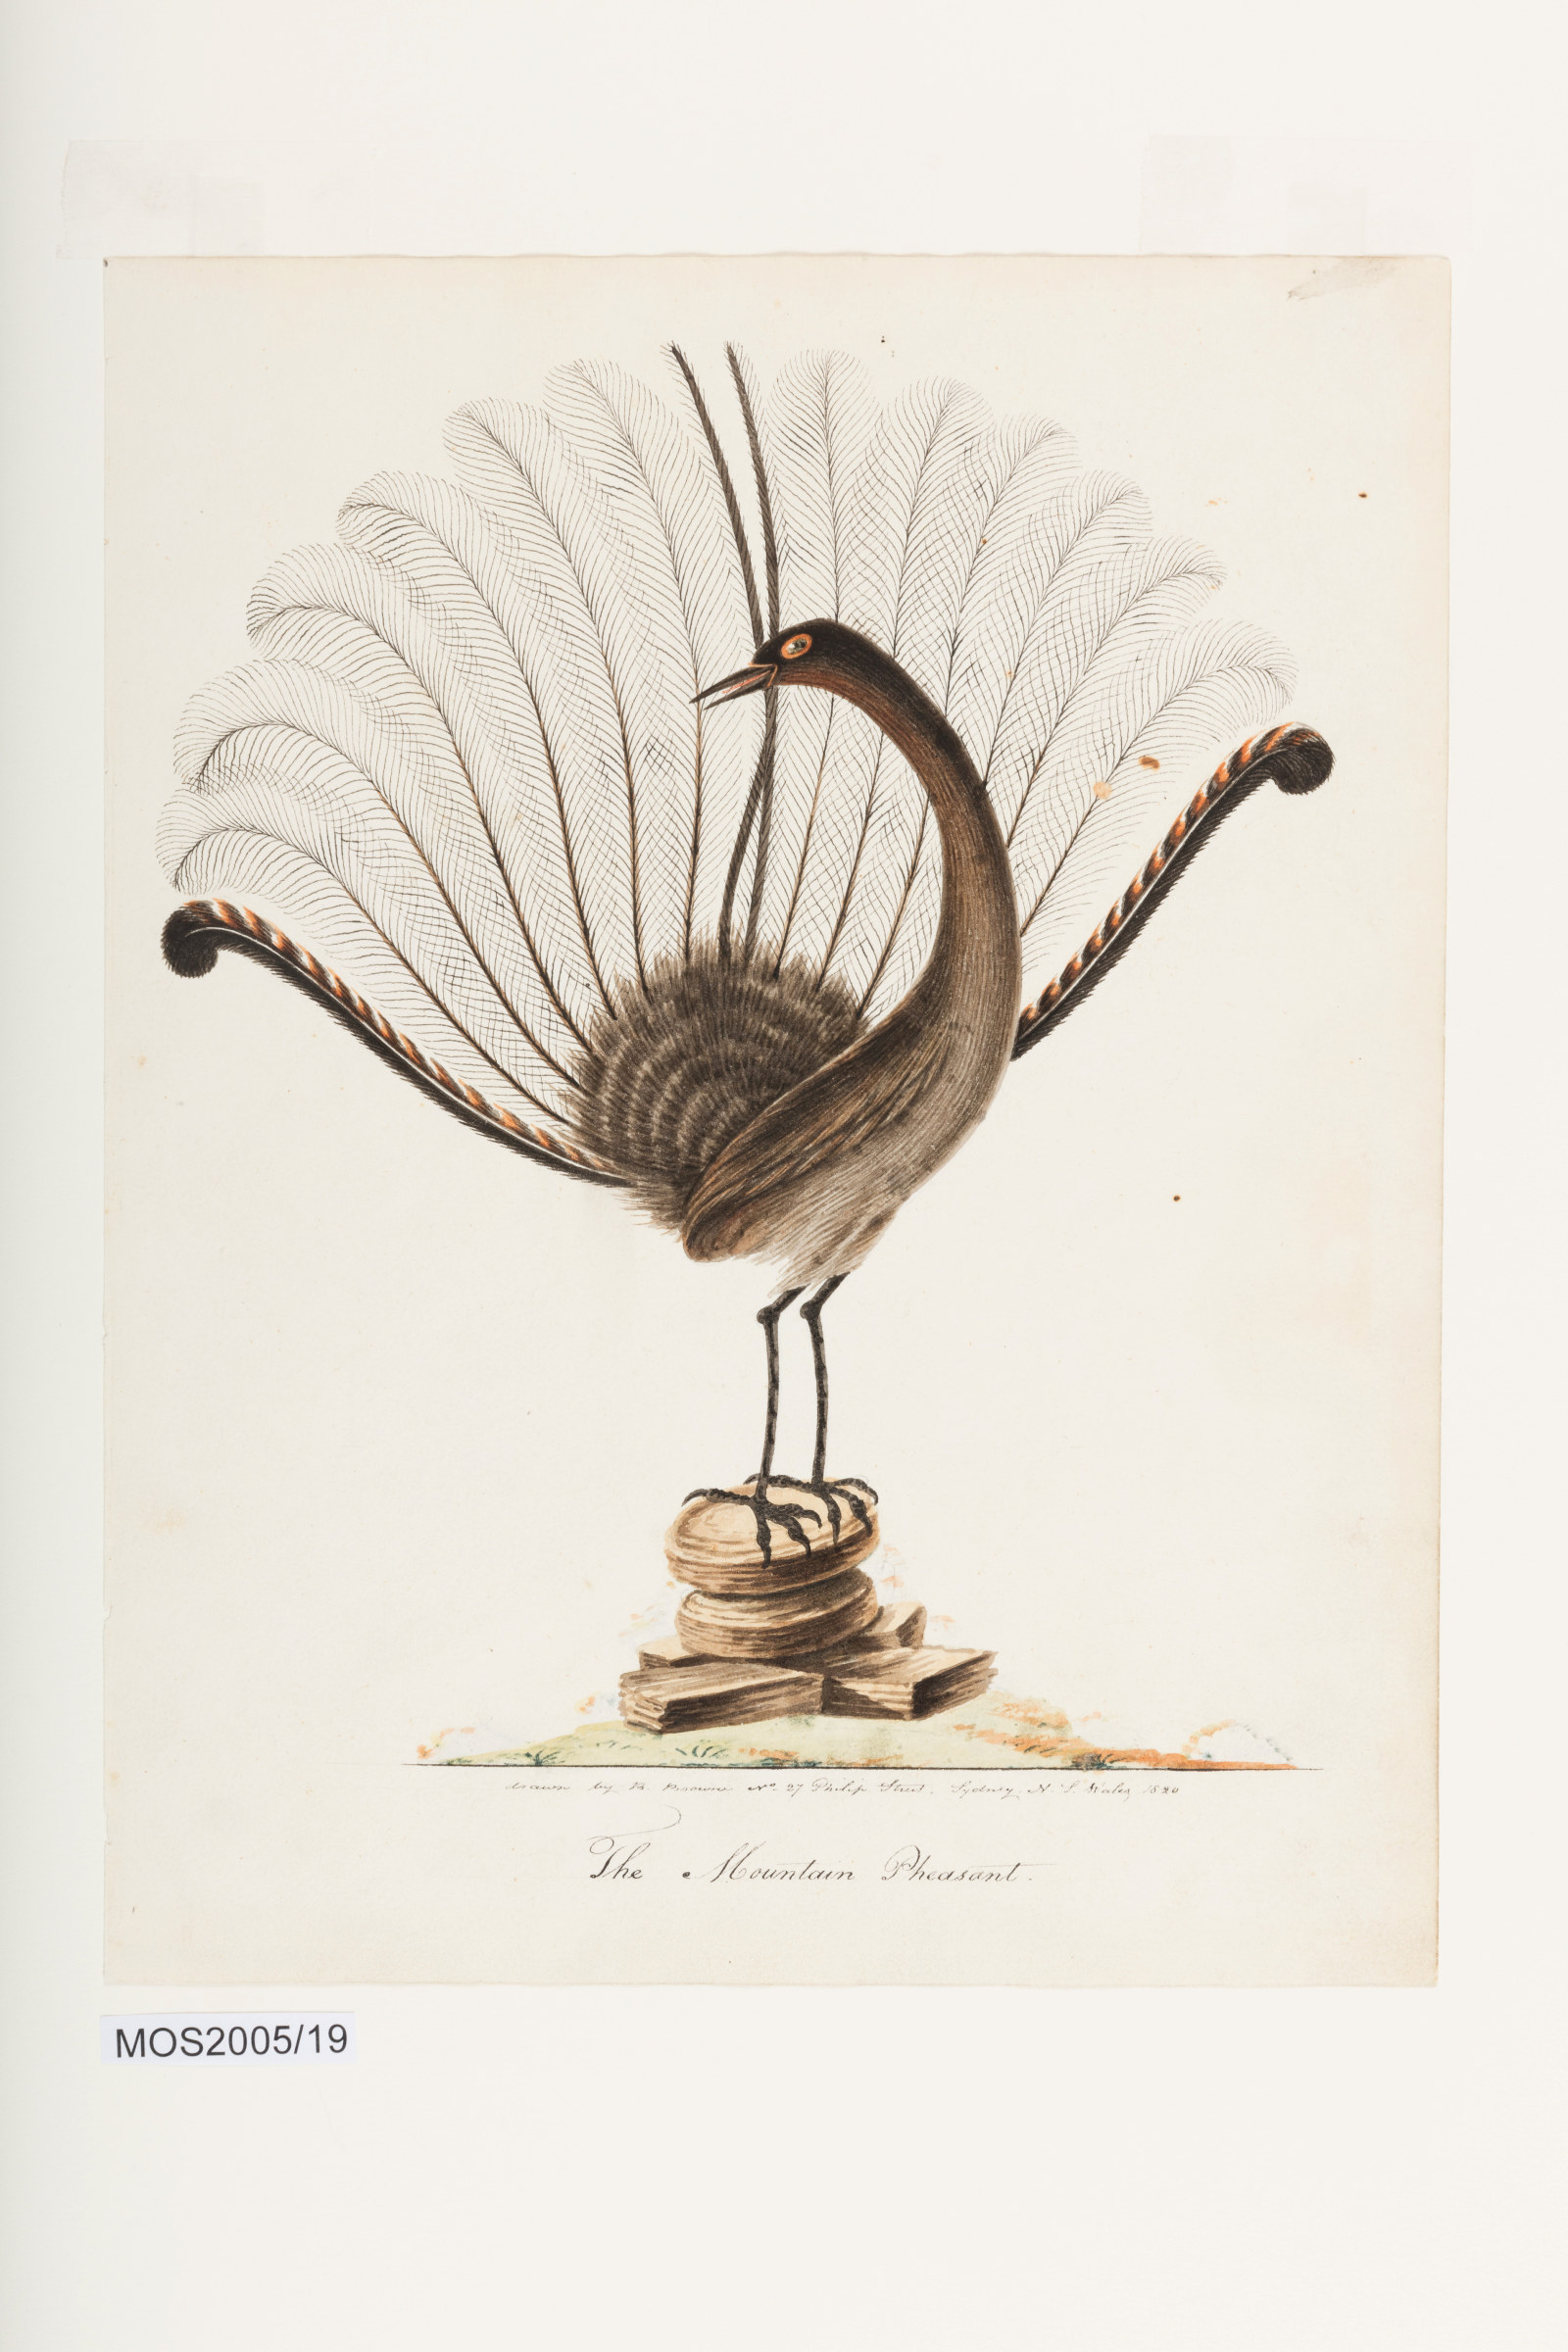 The mountain pheasant, darwn by R. Browne, bo.26 Philip Street, Sydney N.S. Wales, 1820